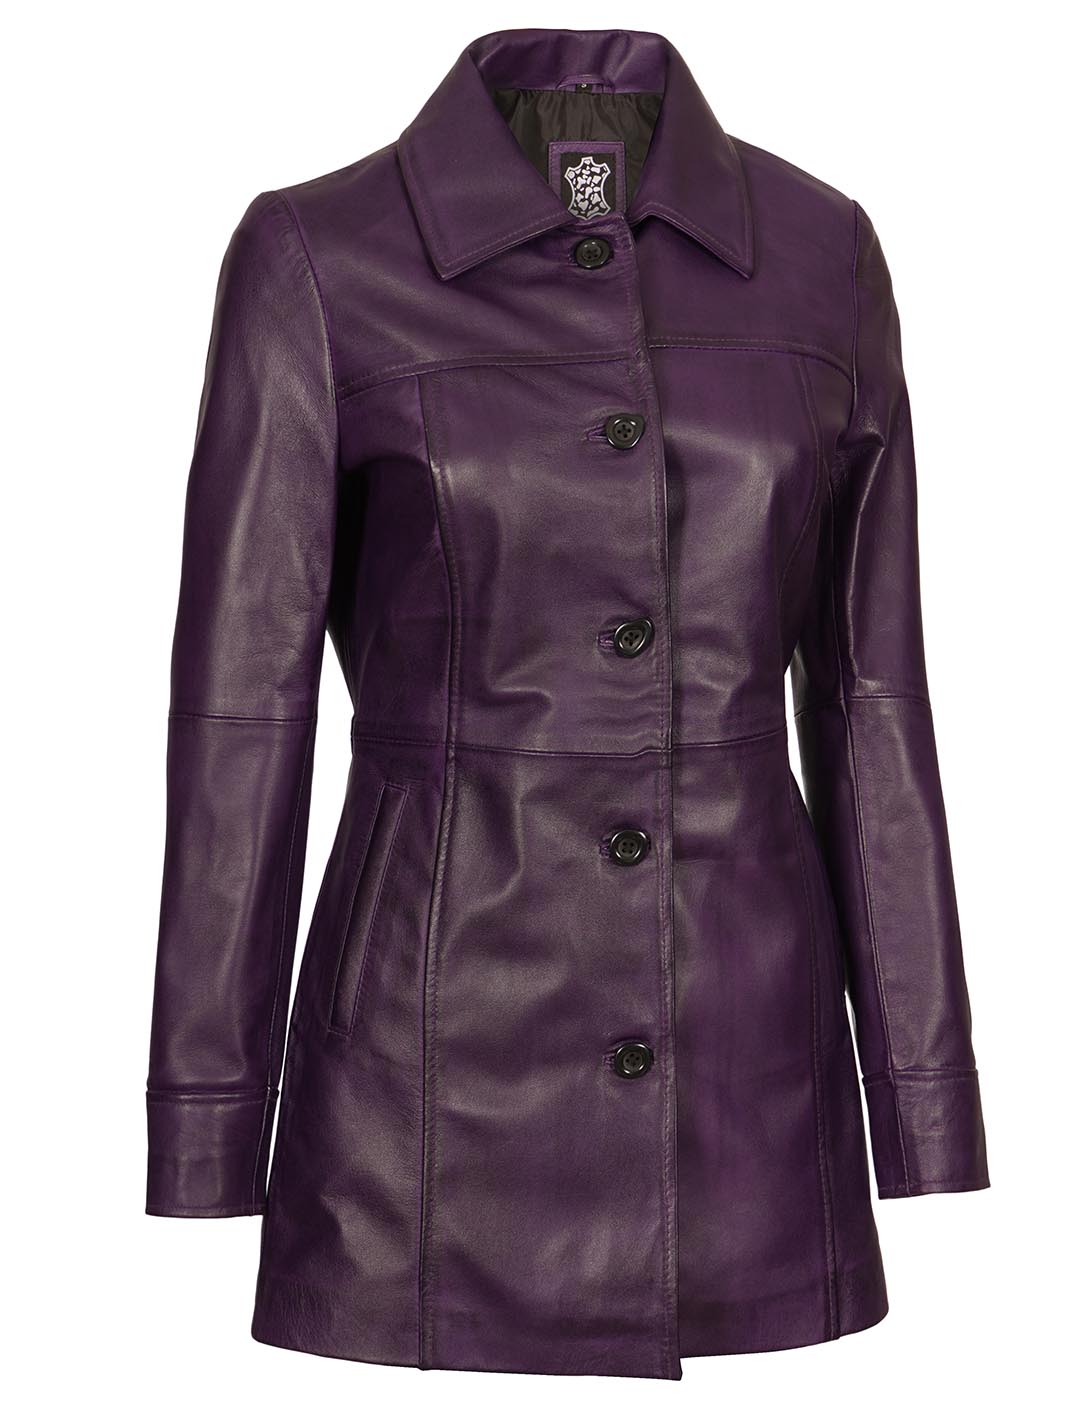 Womens Purple Leather coat Jacket